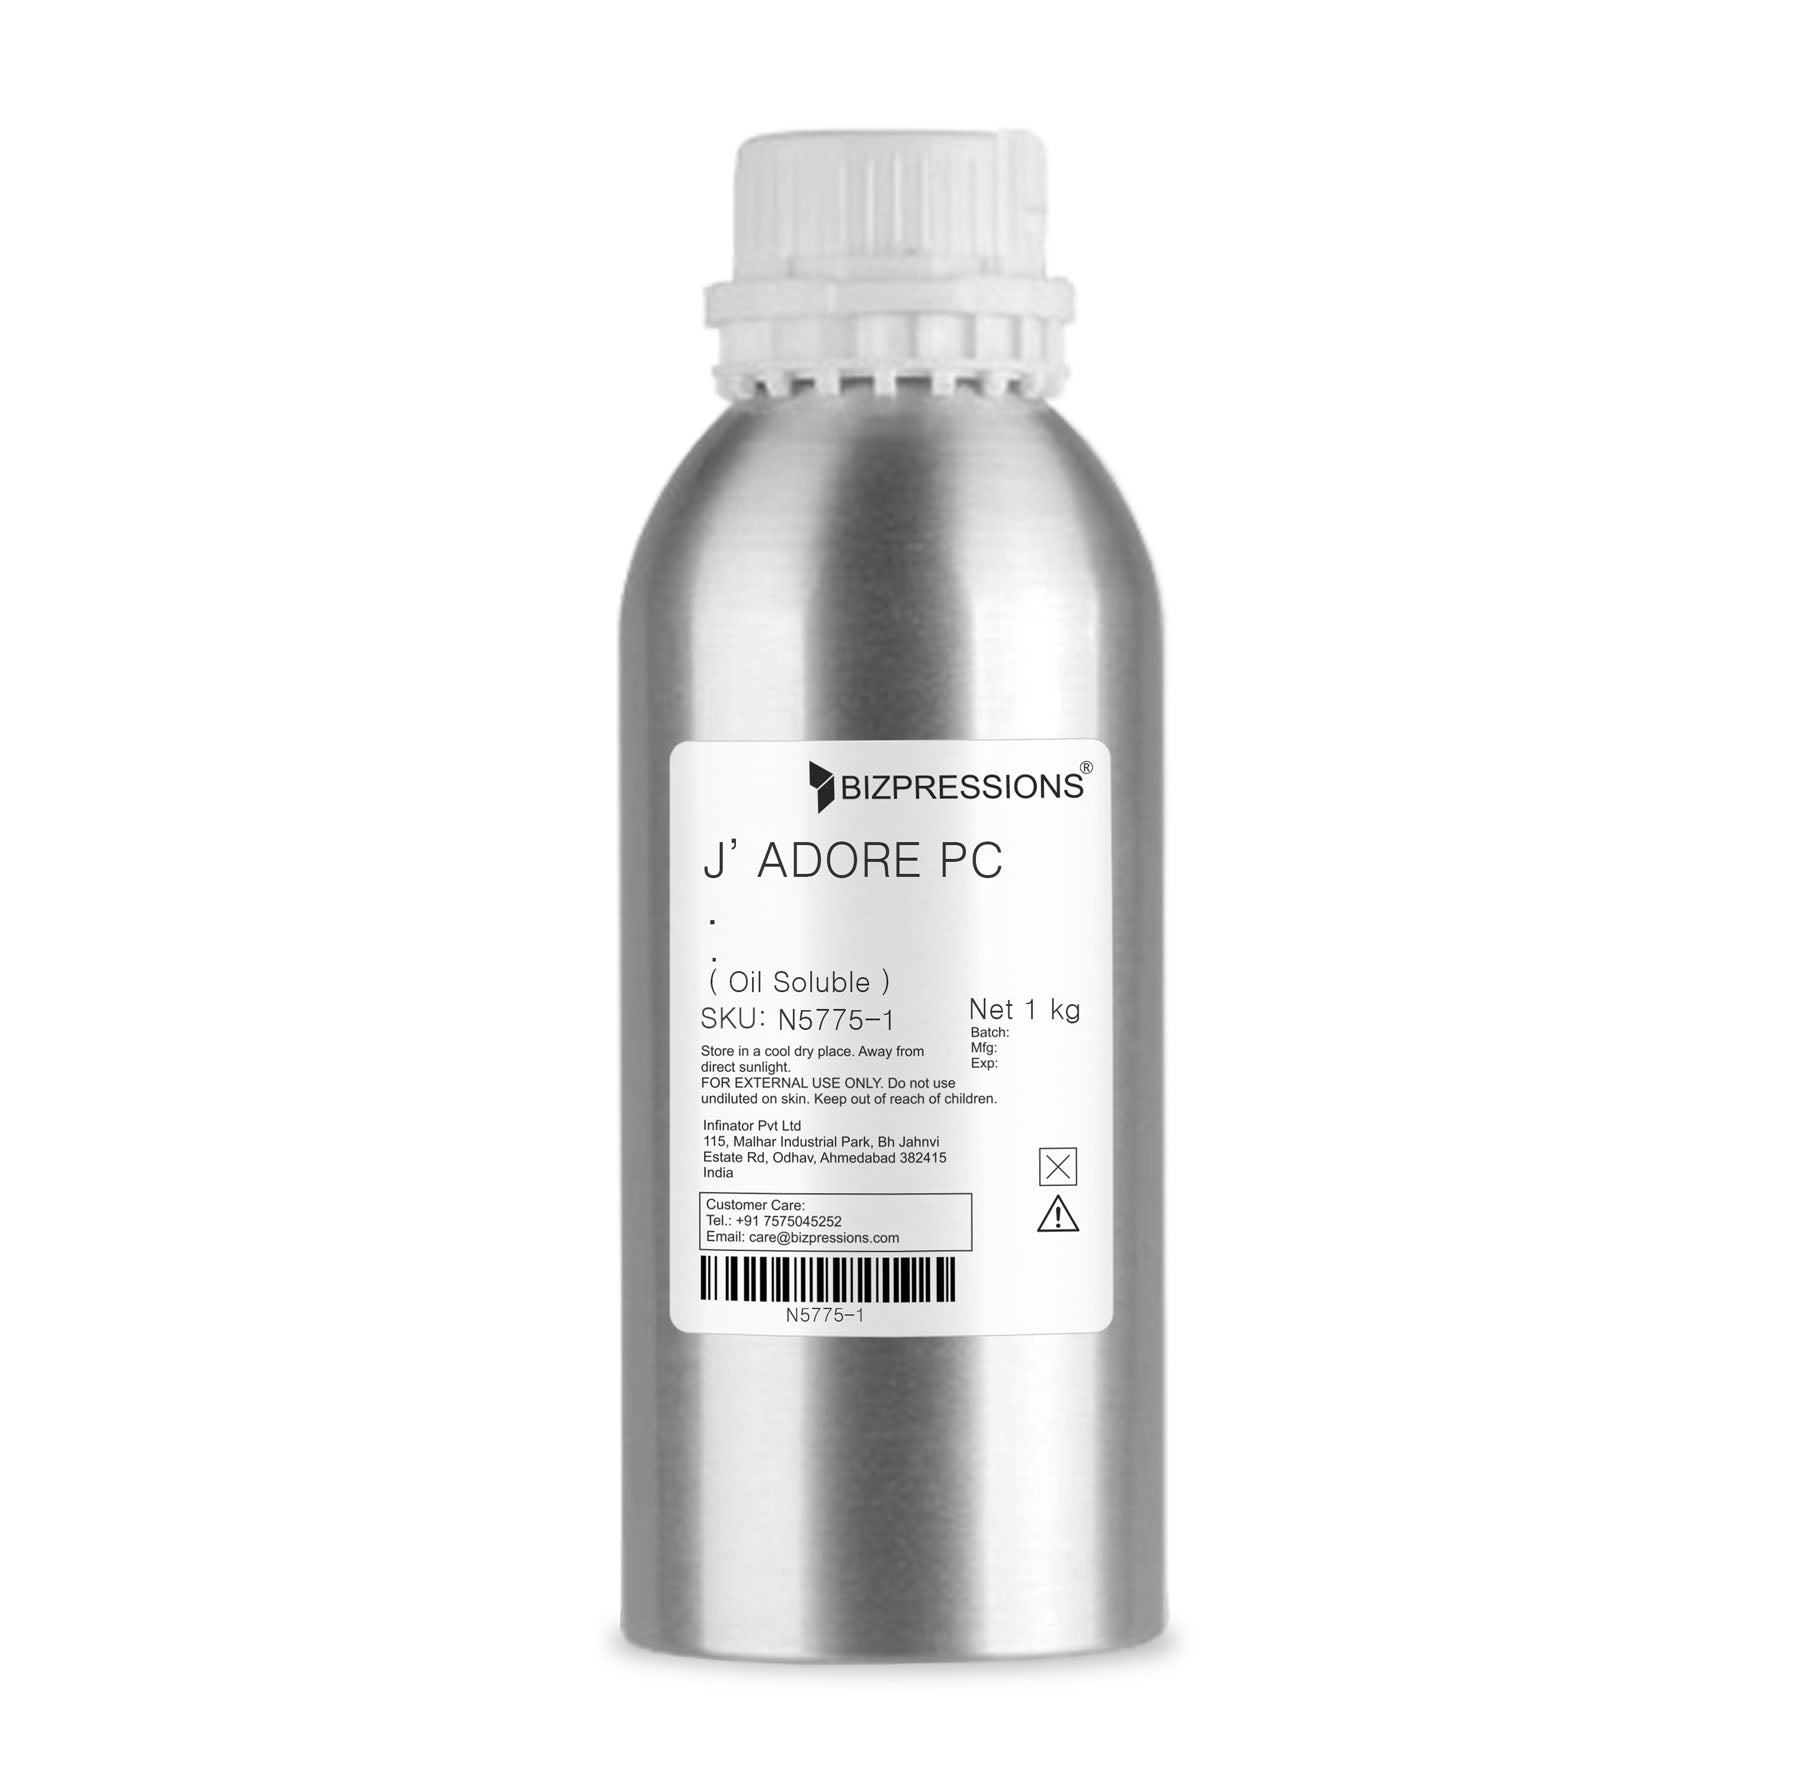 J’ ADORE PC - Fragrance ( Oil Soluble ) - 1 kg